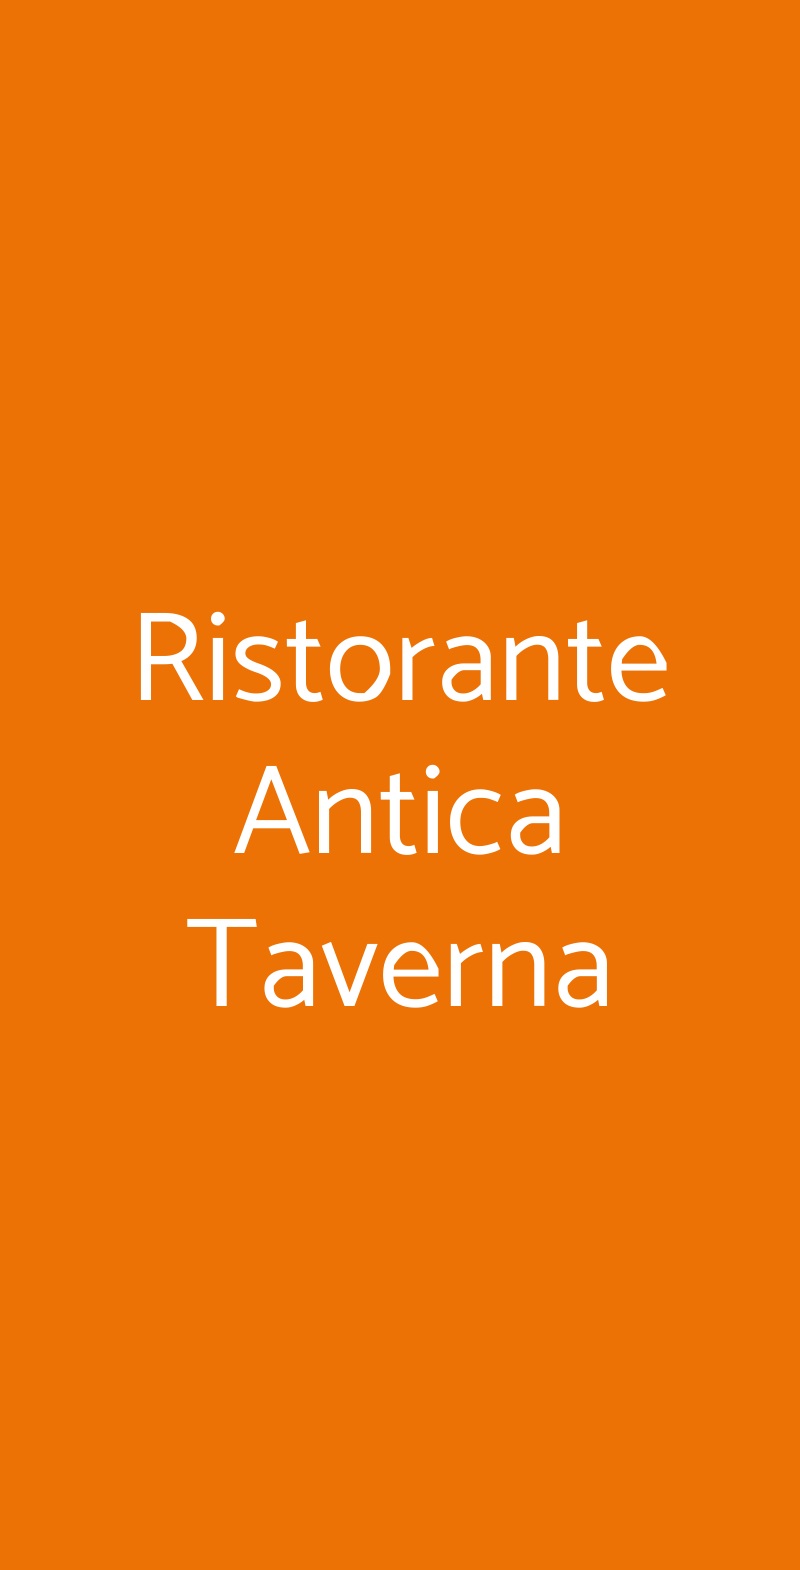 Ristorante Antica Taverna Roma menù 1 pagina